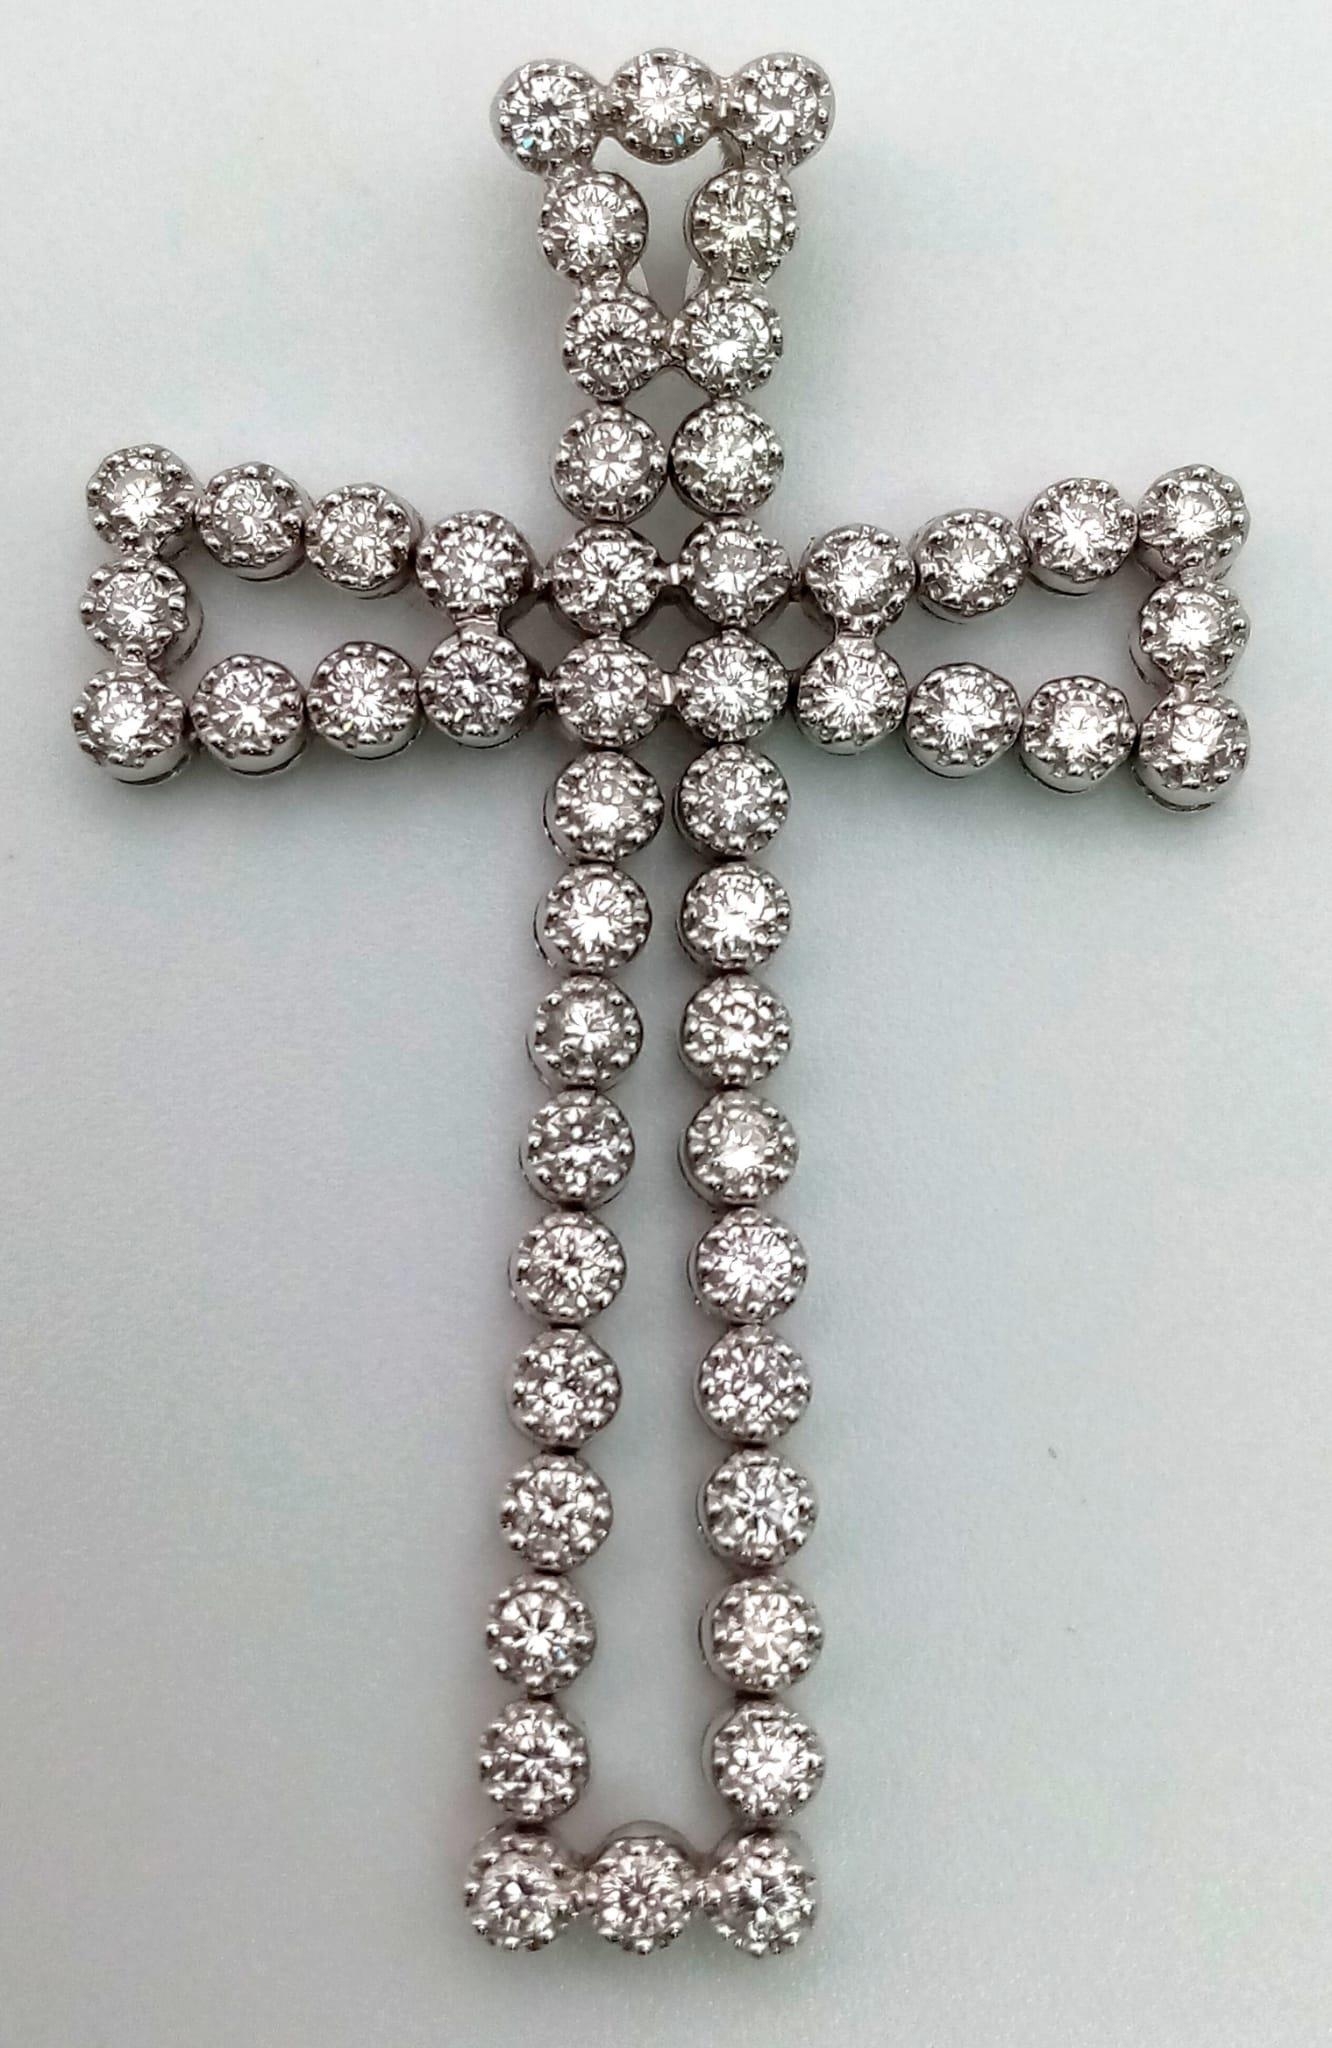 An 18K White Gold Diamond Cross Pendant. 5ct of exceptional bright round-cut diamonds create a